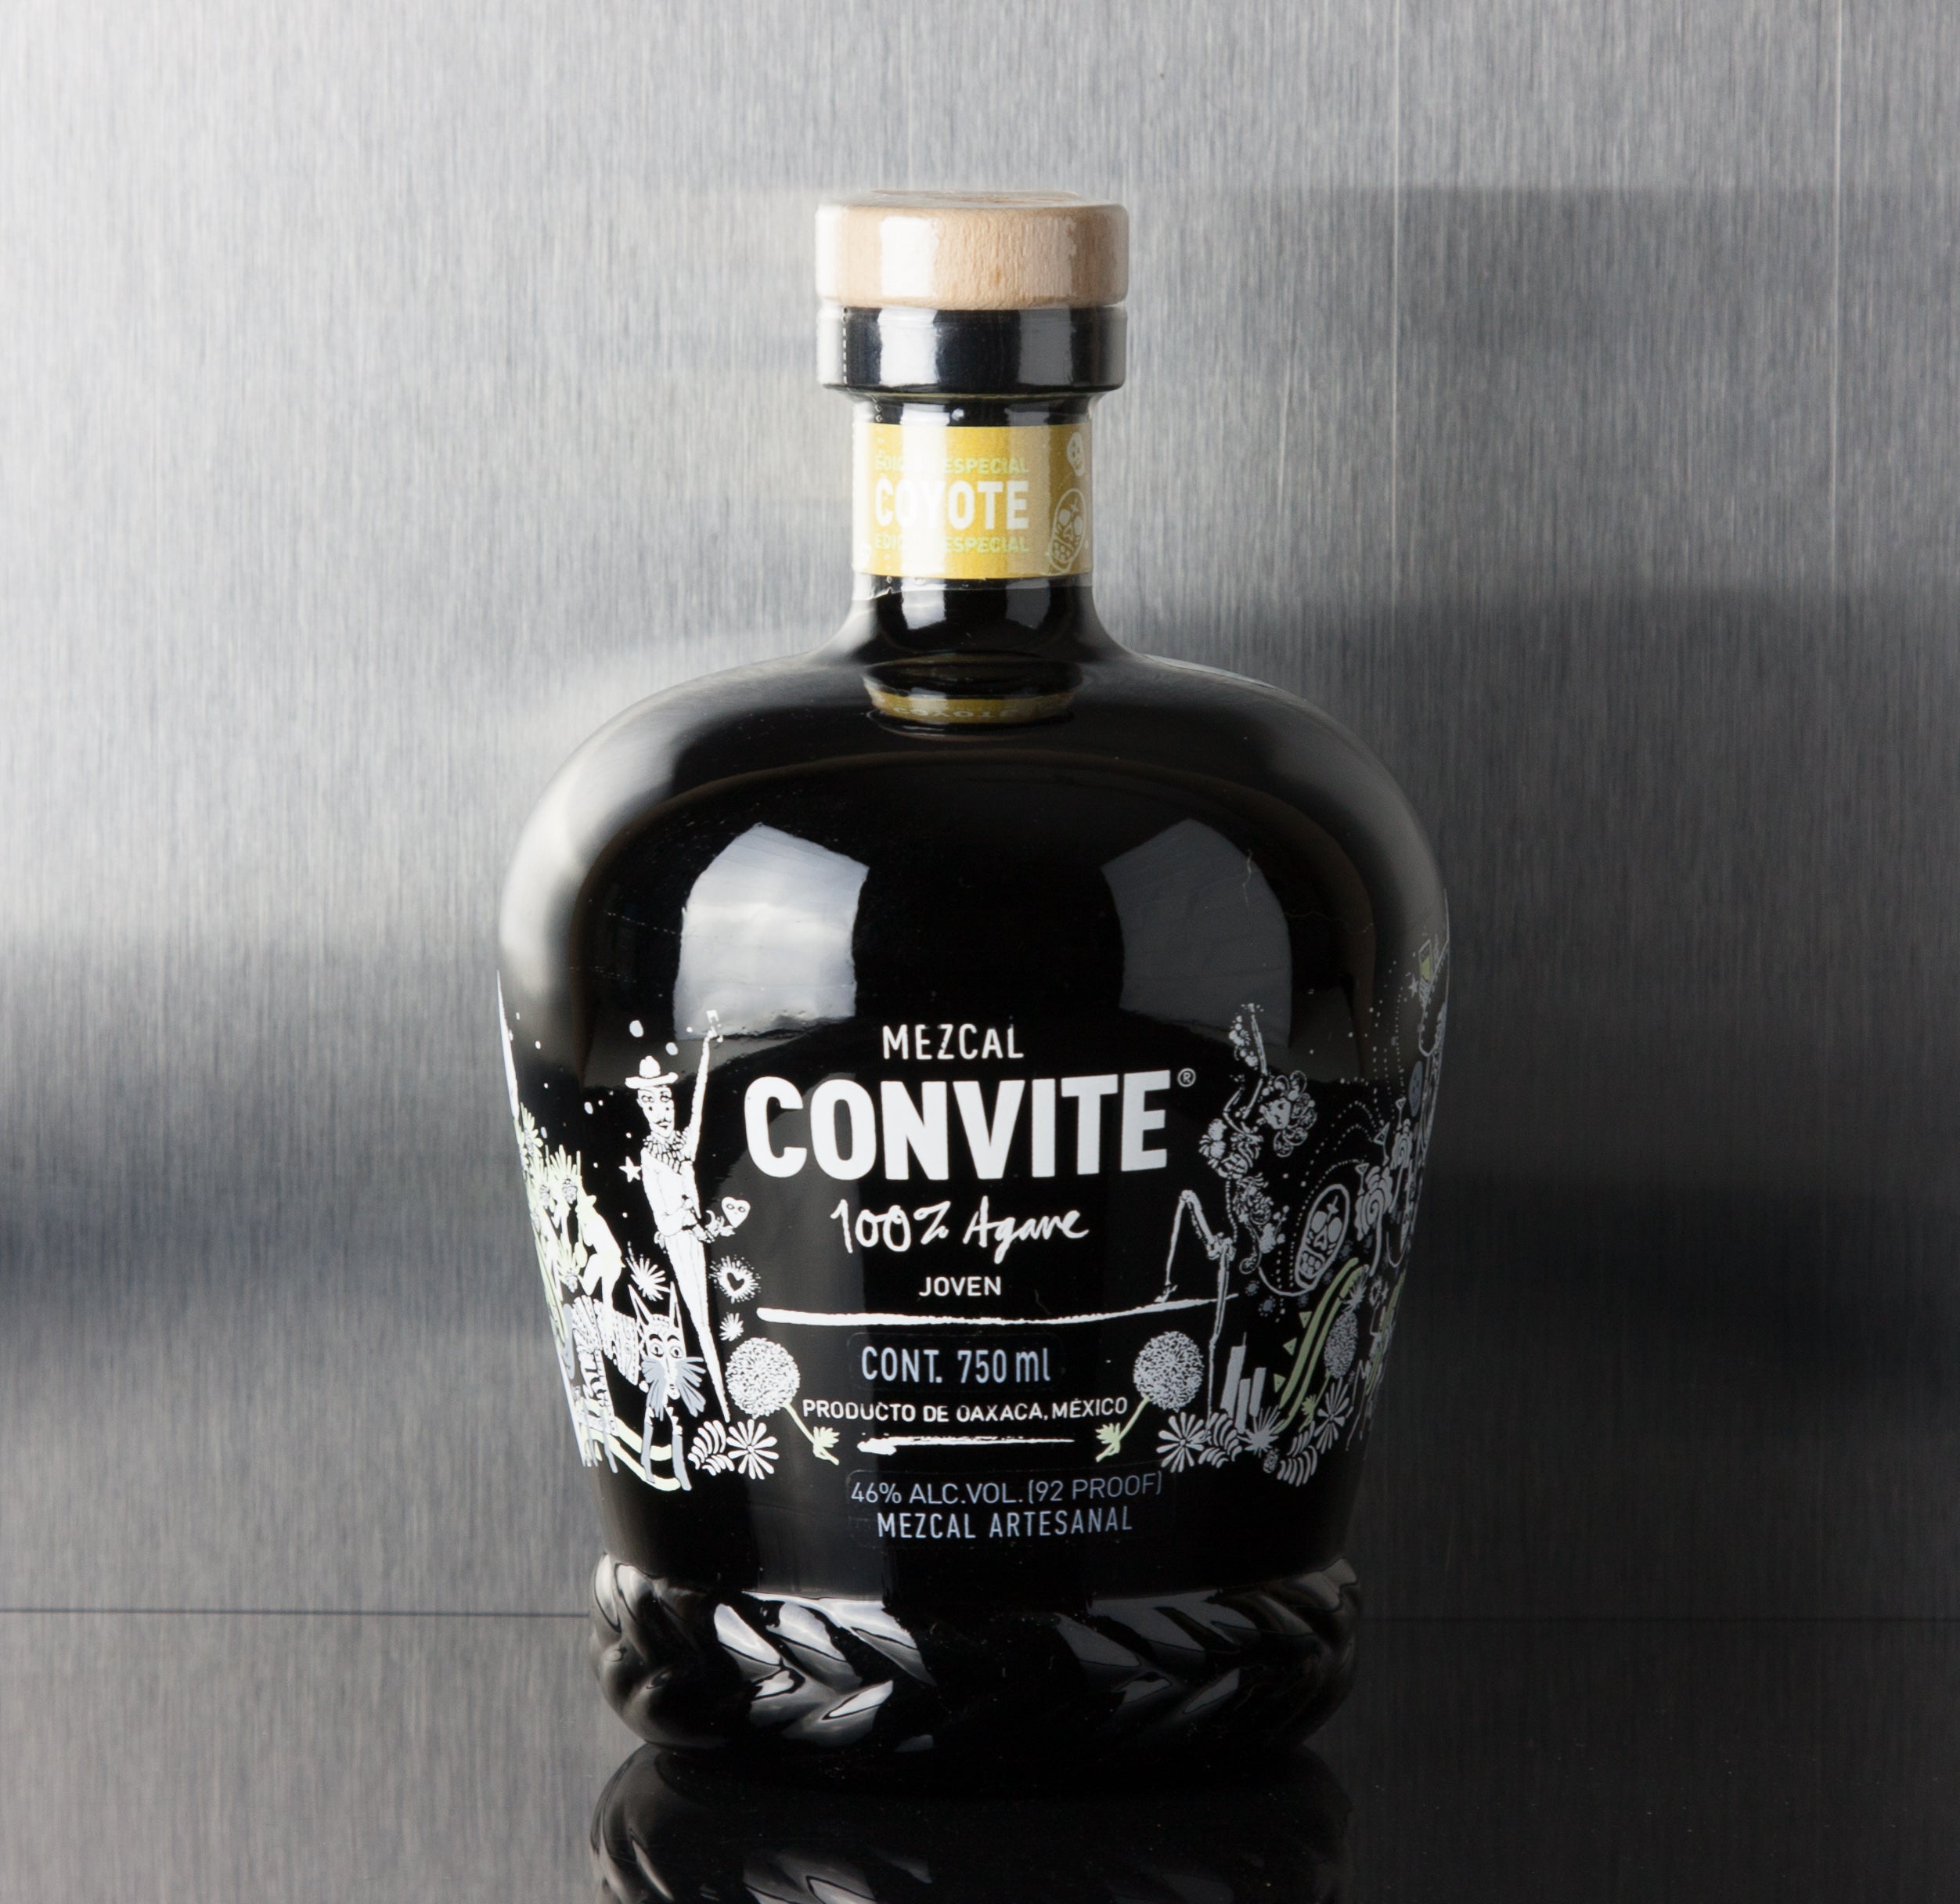 Convite Mezcal Coyote - Convite - Third Base Market & Spirits Liquor